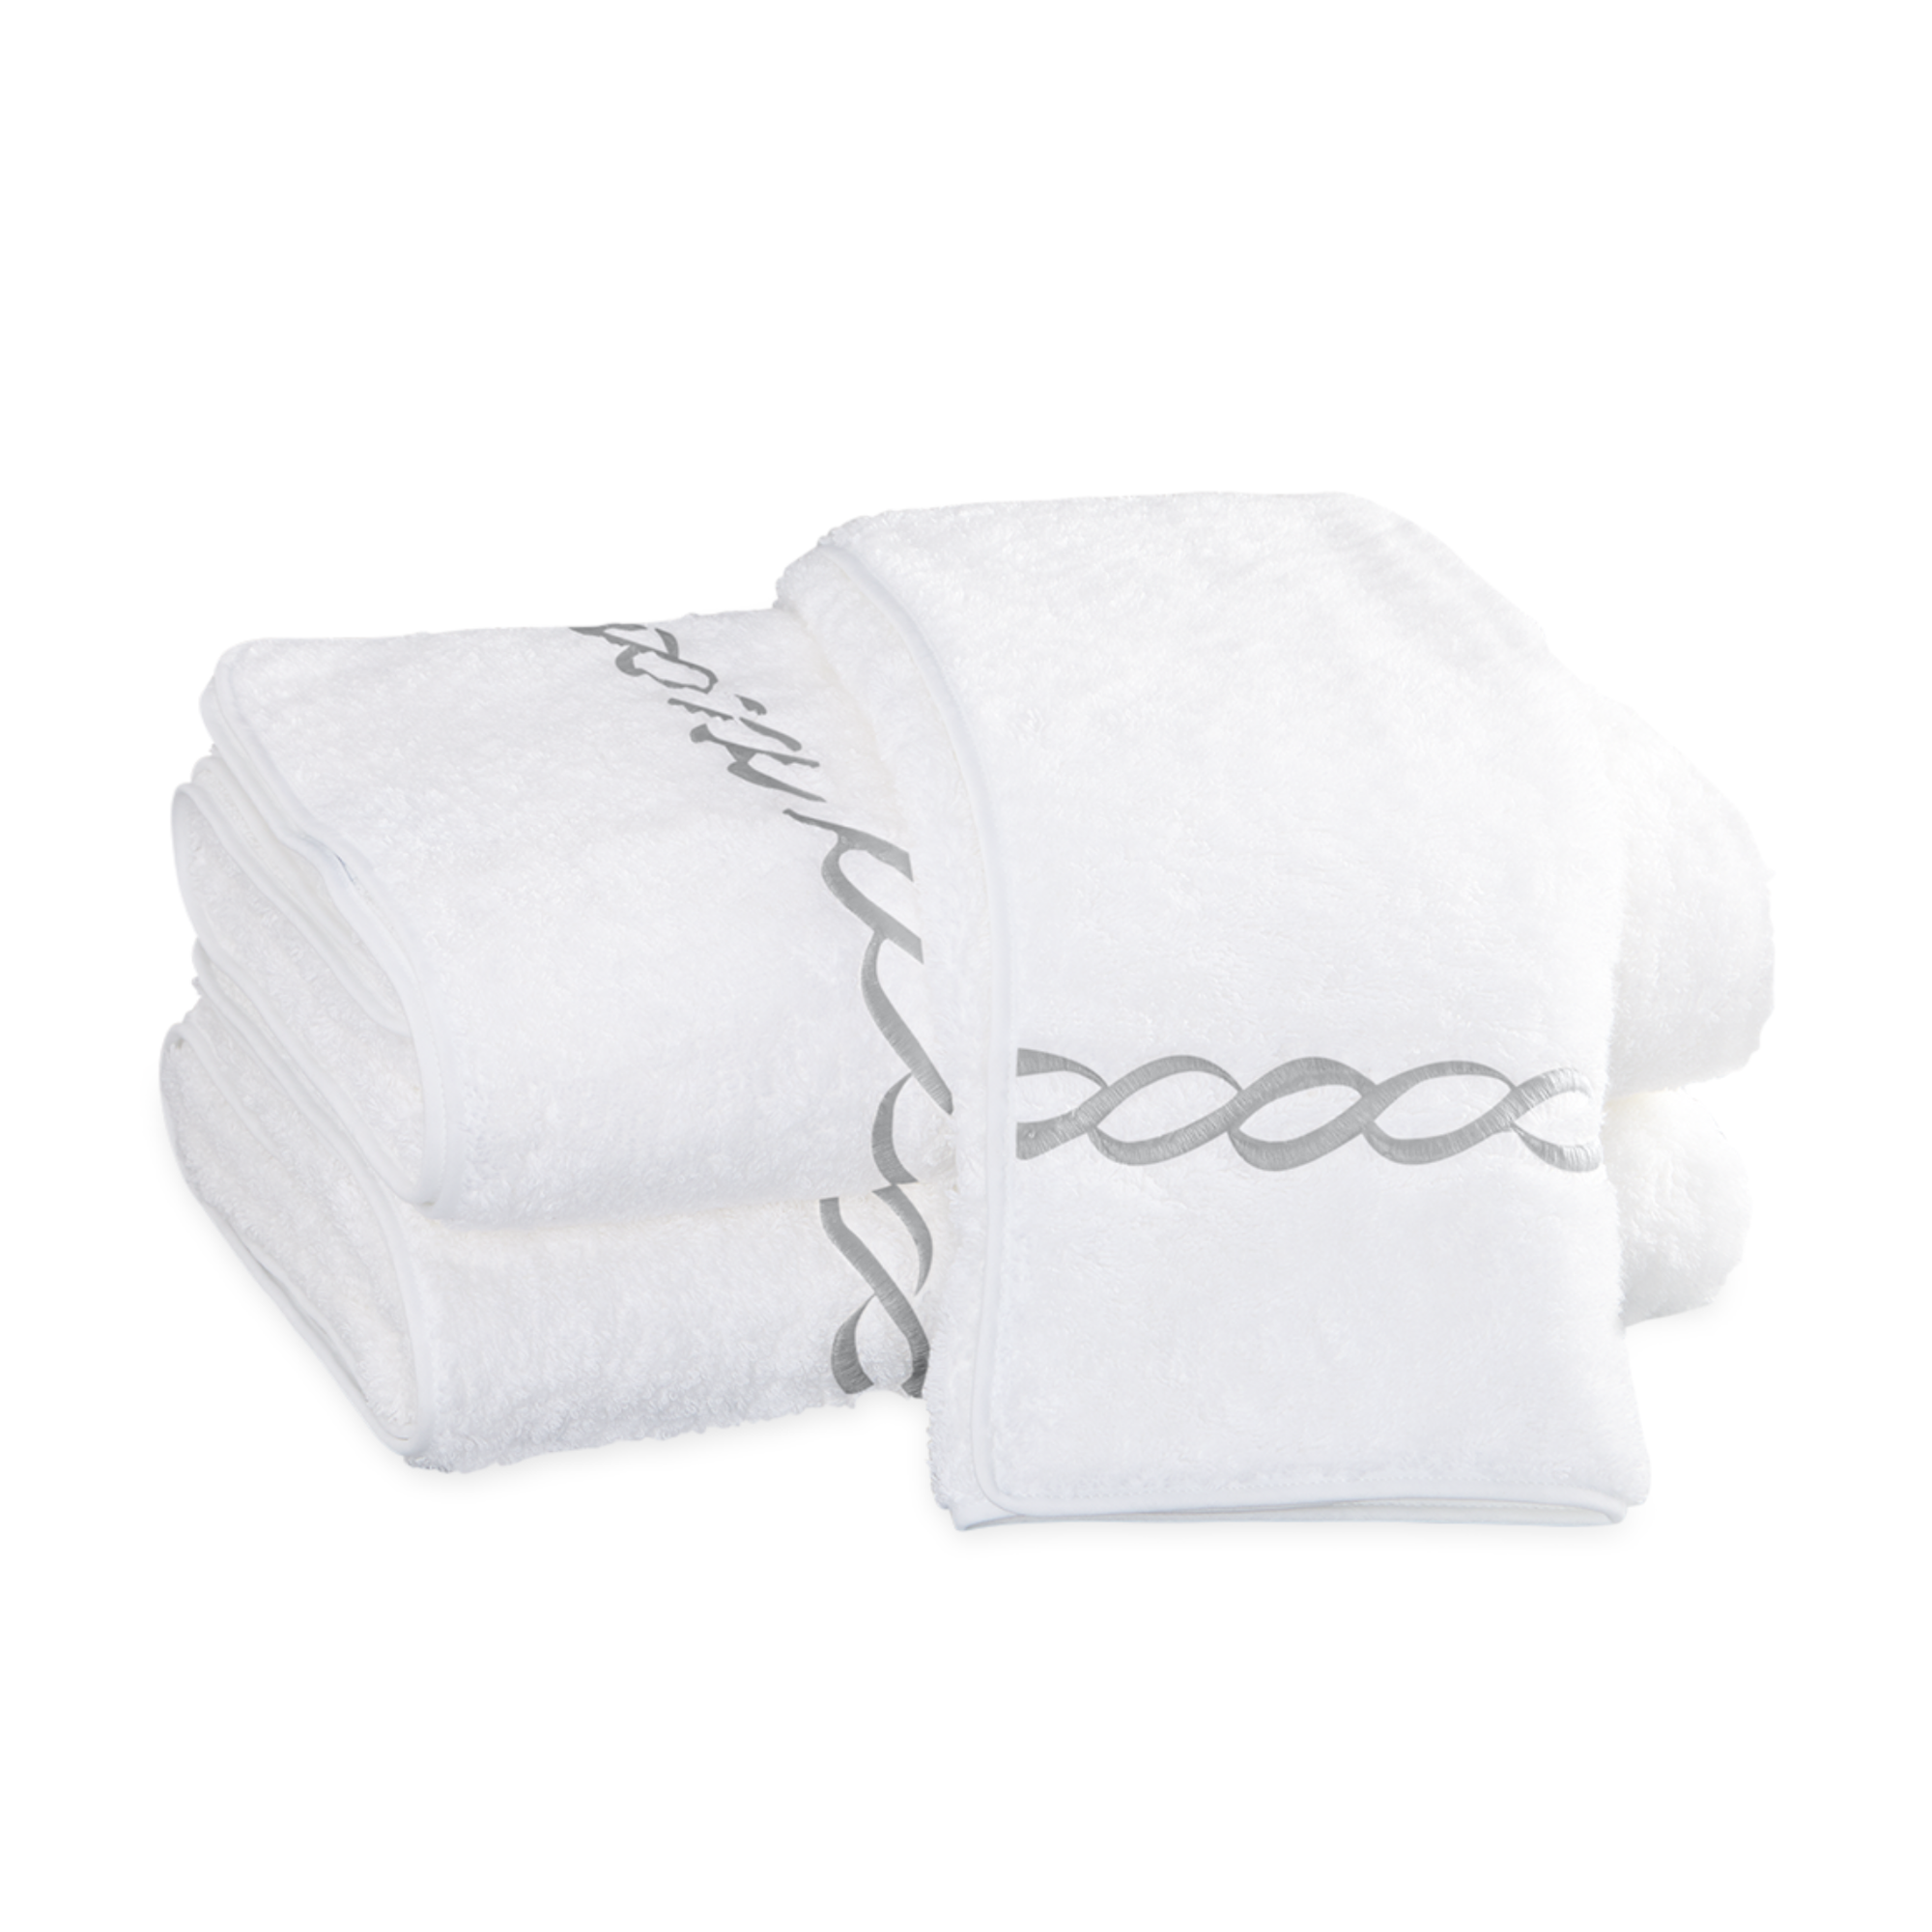 Folded Matouk Classic Chain Bath Towels in Color Silver